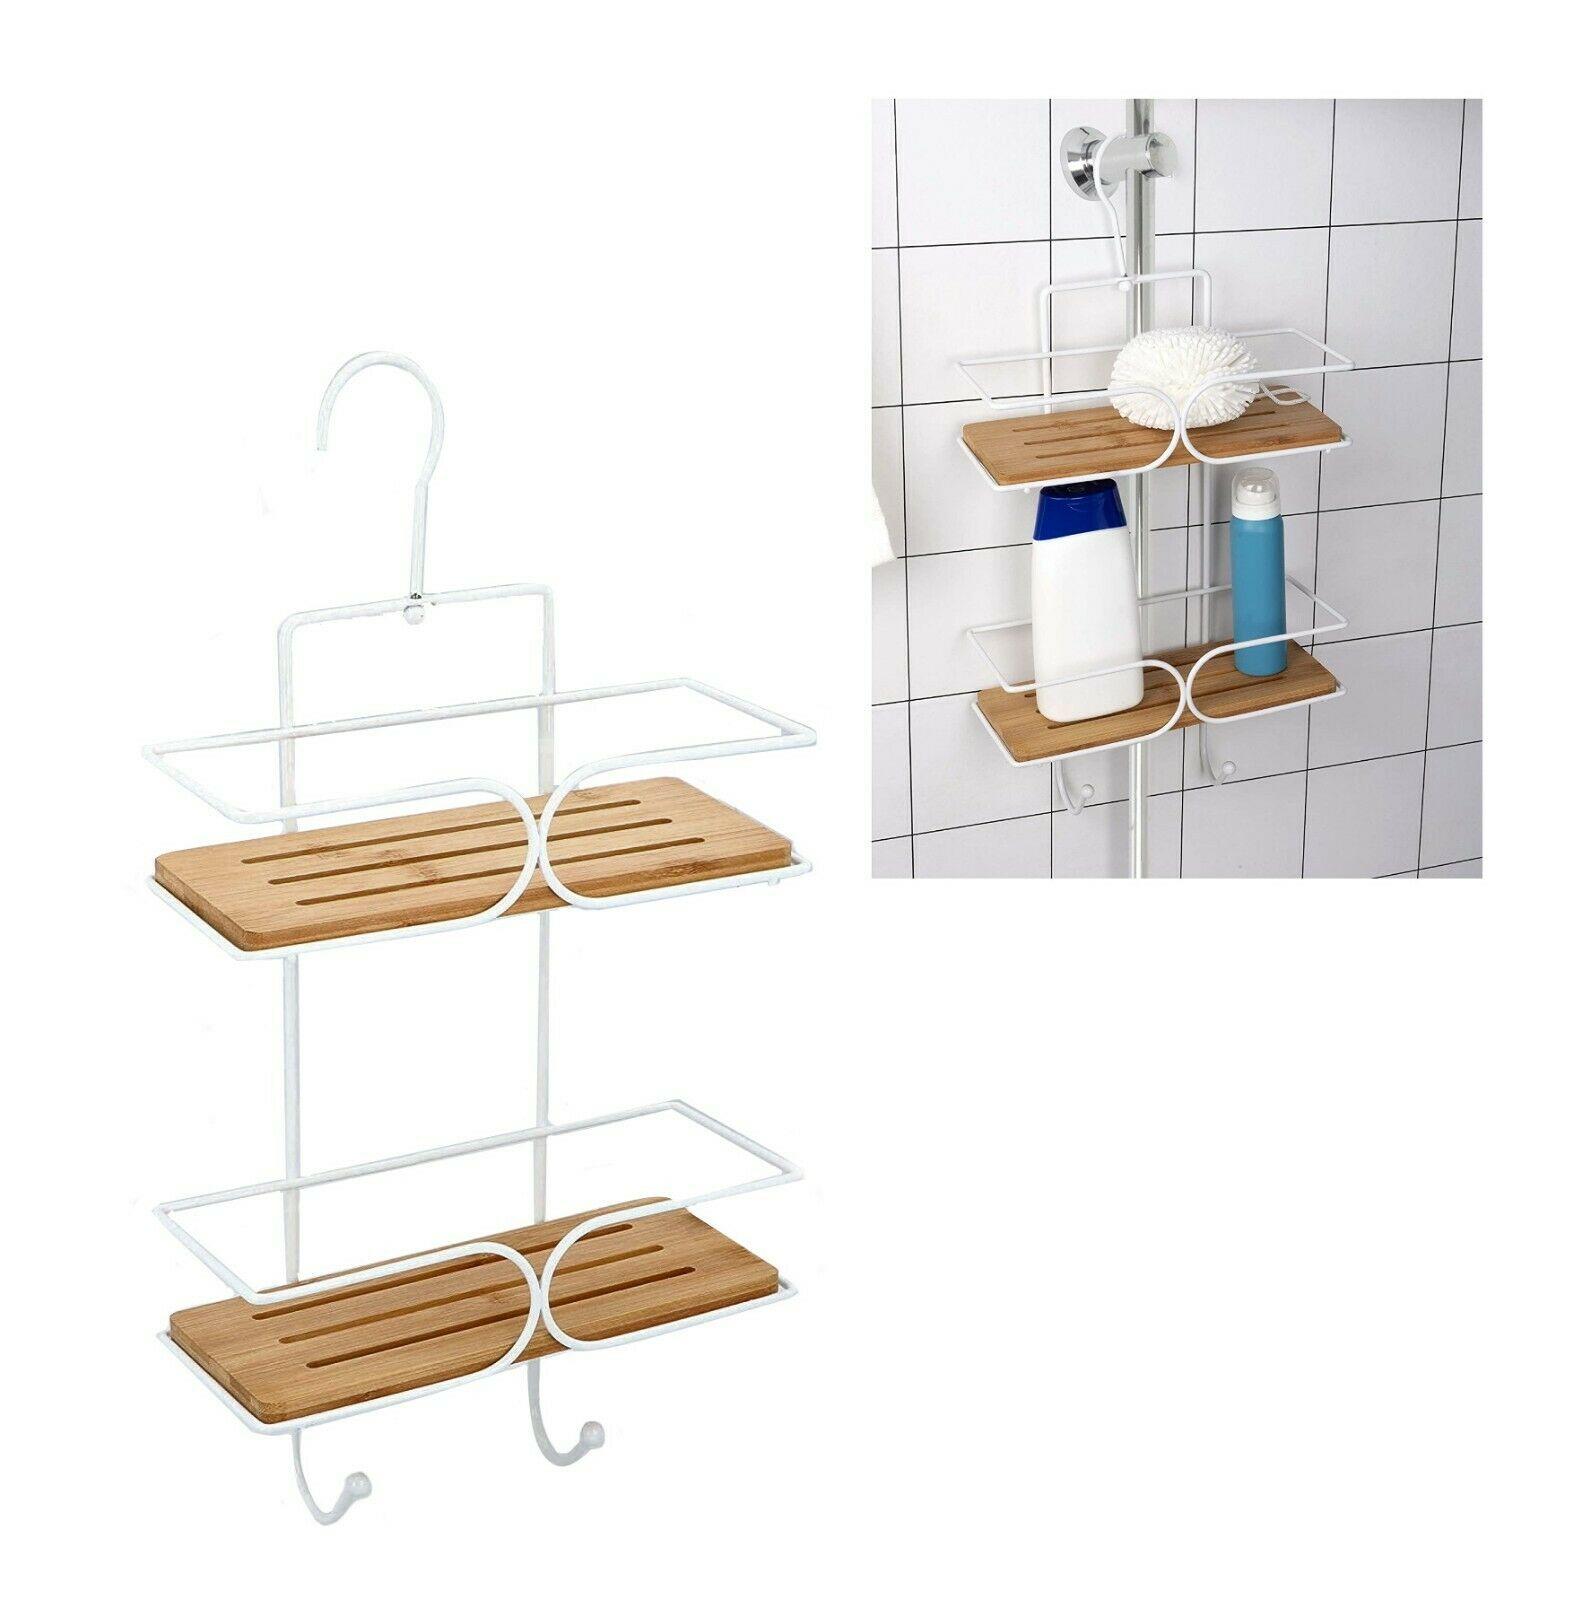 Details about   Hanging Shower Caddy Wire Rack Holder Organizer Hooks Bathroom EXTRA WIDE 